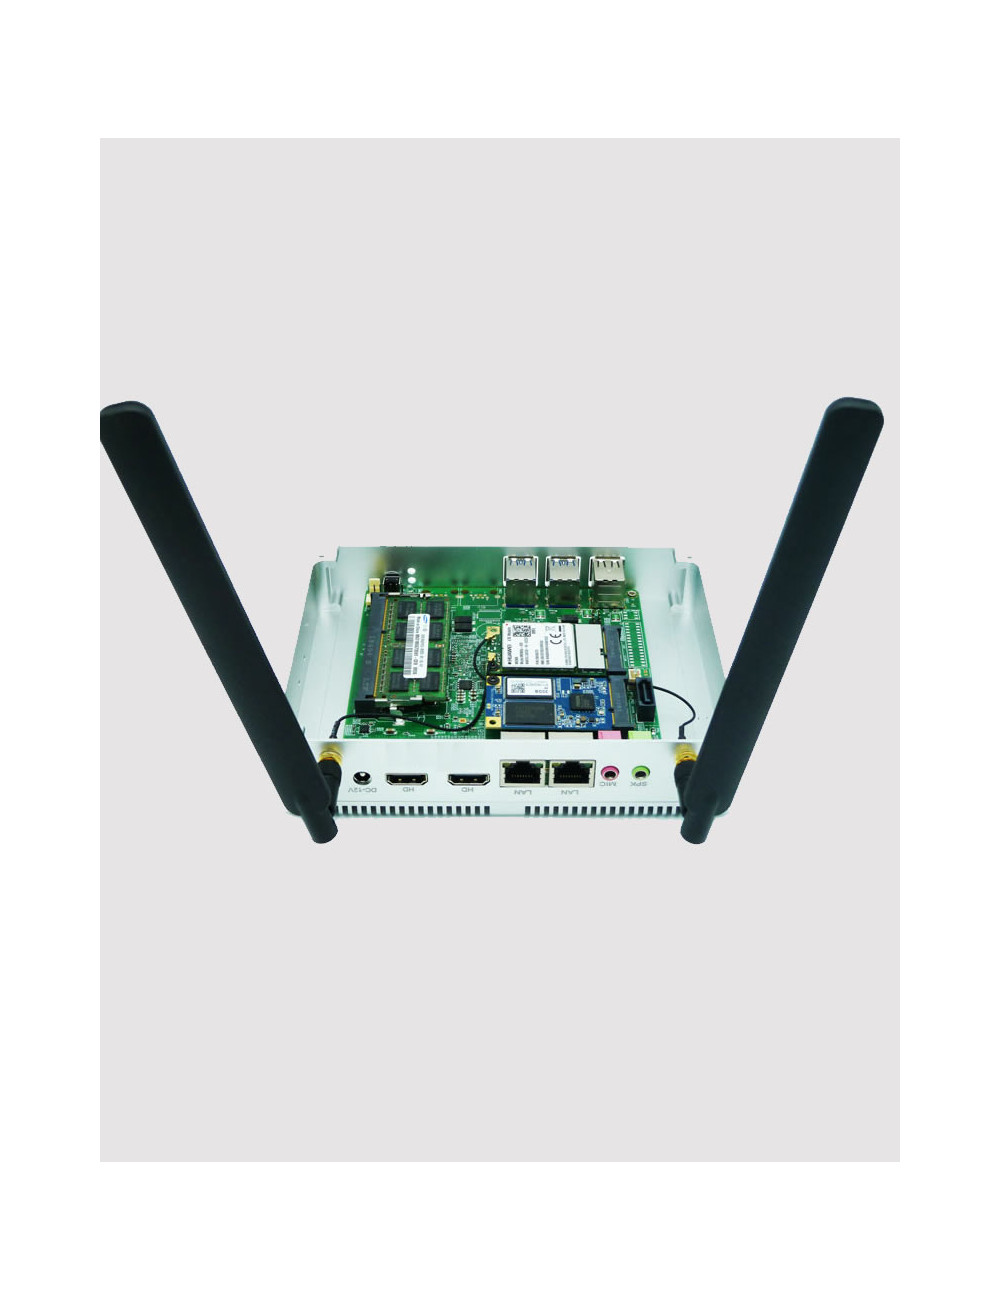 Firewall EG2x sous OPNsense 2 ports Gigabit 2Go SSD 250Go